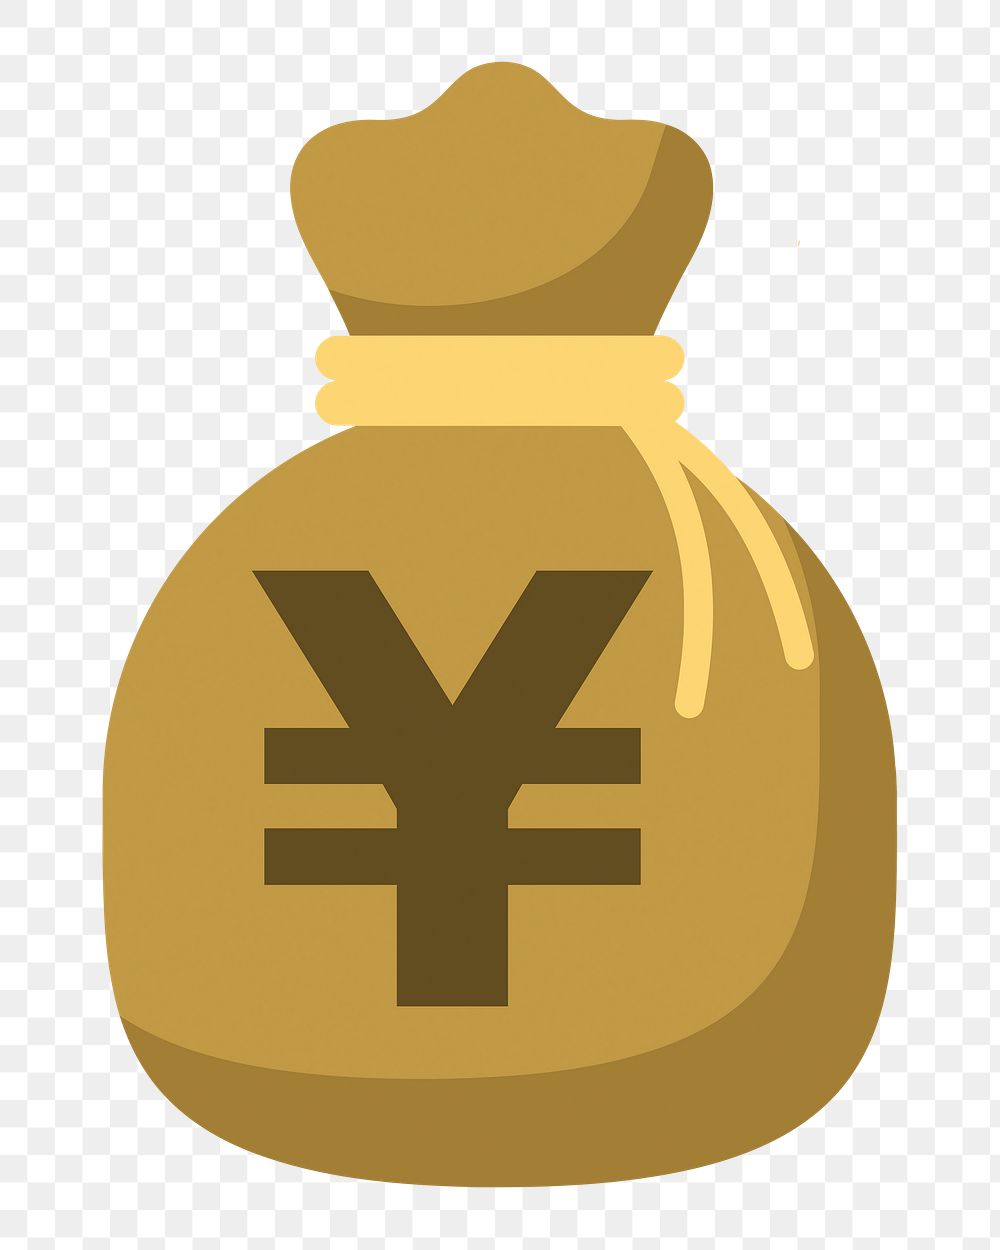 Japanese Yen currency money bag png illustration, transparent background. Free public domain CC0 image.